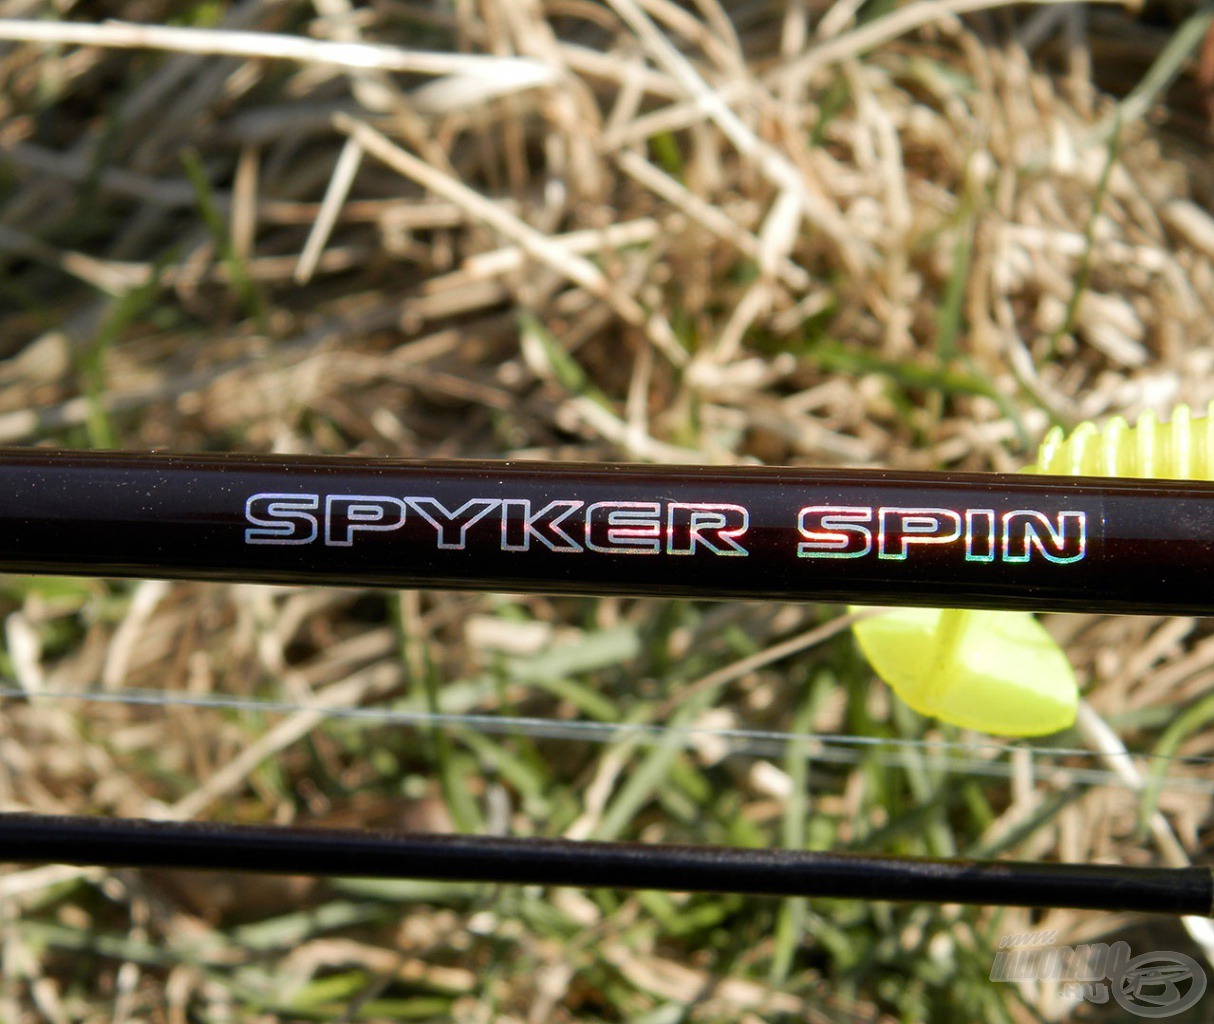 A Nevis Spyker Spin botot nagyon megkedveltem